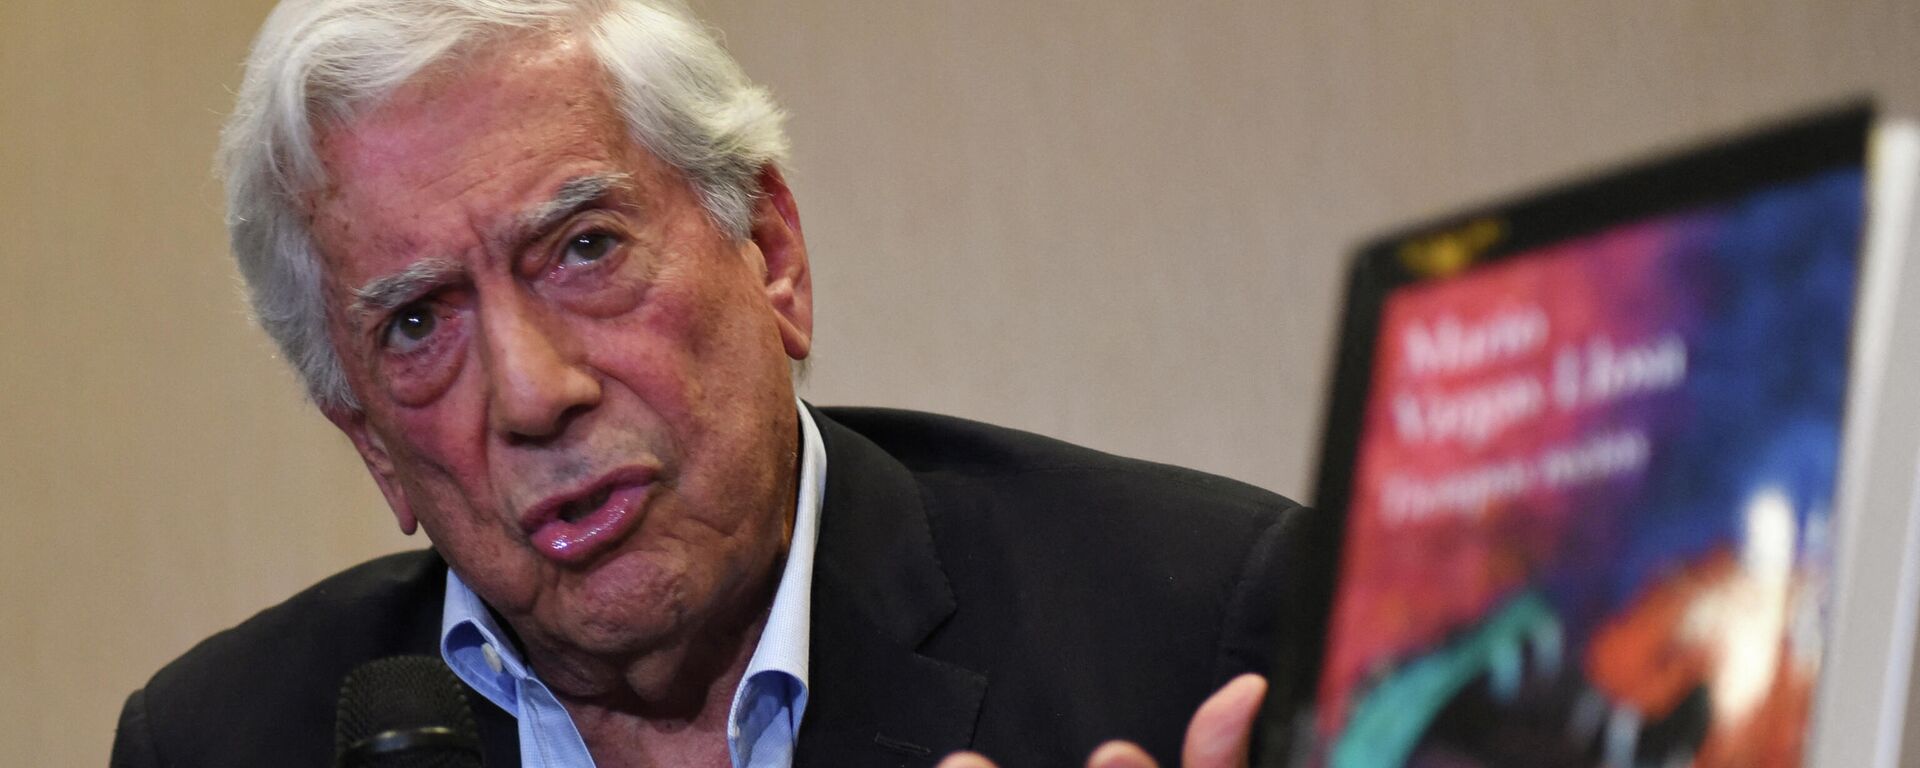 Mario Vargas Llosa, Nobel de Literatura - Sputnik Mundo, 1920, 24.09.2021